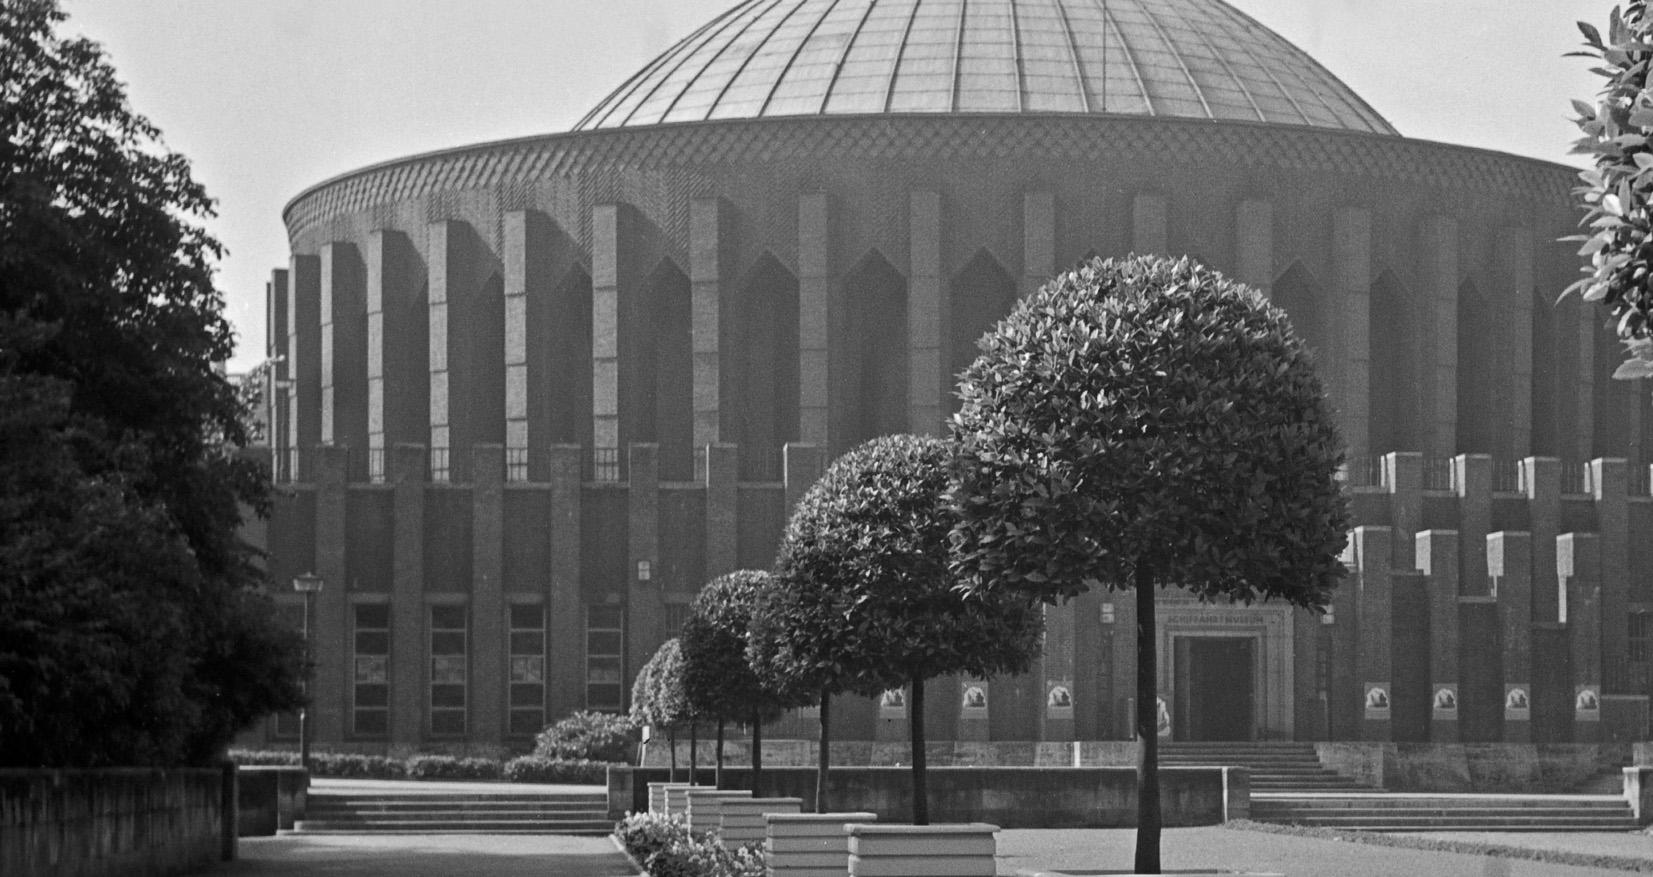 Duesseldorf planetarium and Shipping Museum, Allemagne 1937 Imprimé plus tard  - Photograph de Karl Heinrich Lämmel